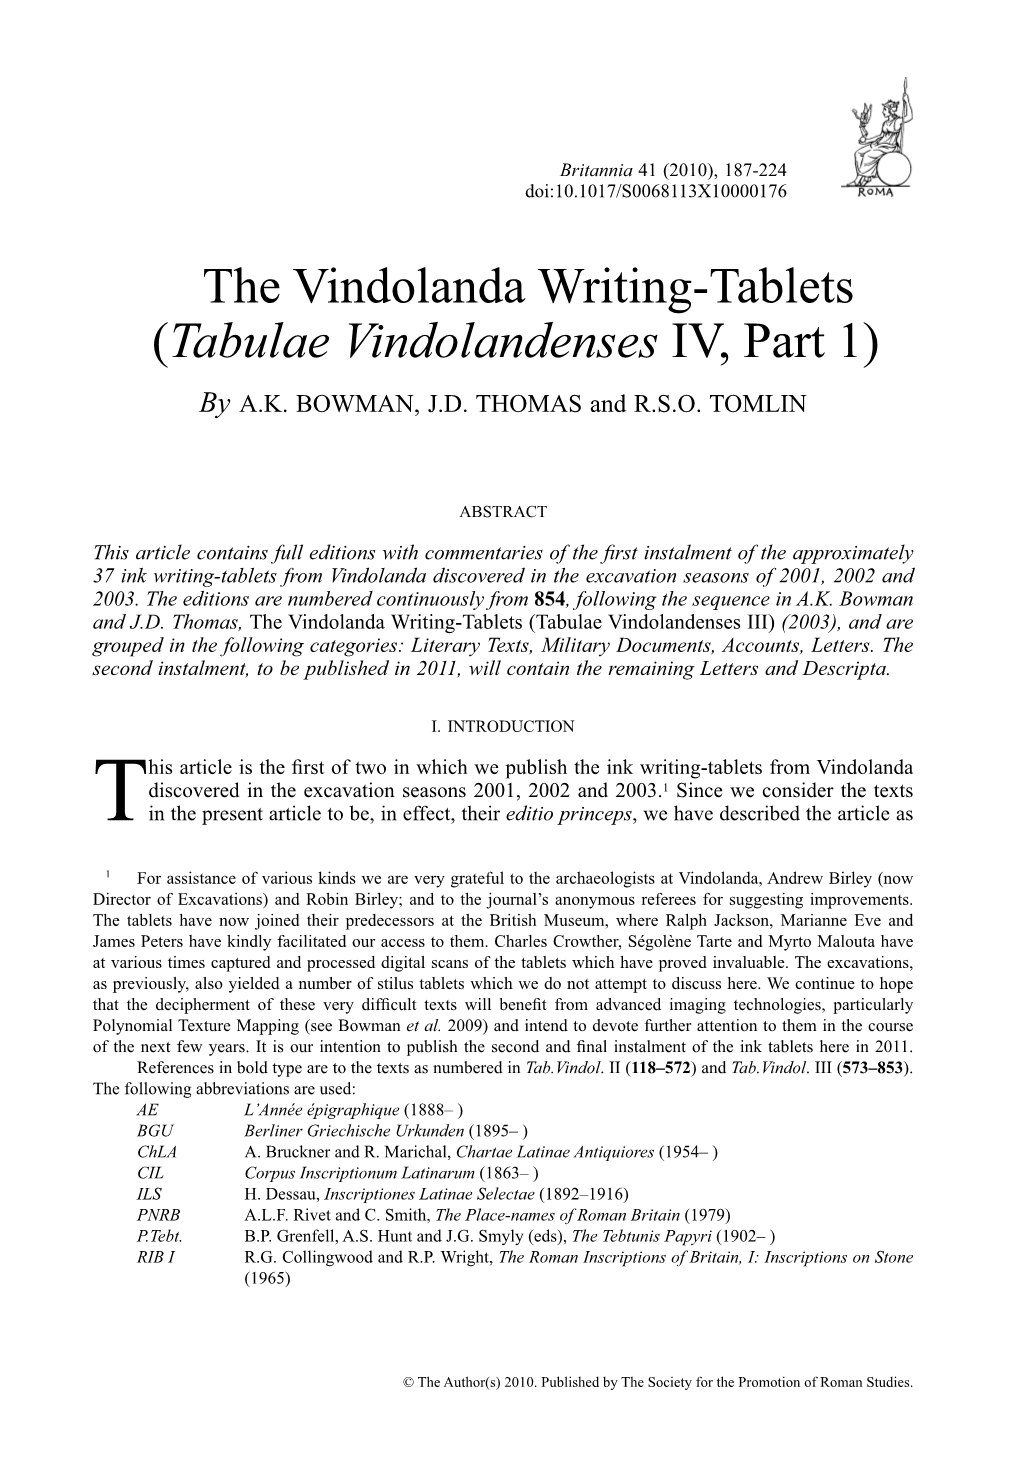 The Vindolanda Writing-Tablets A.K